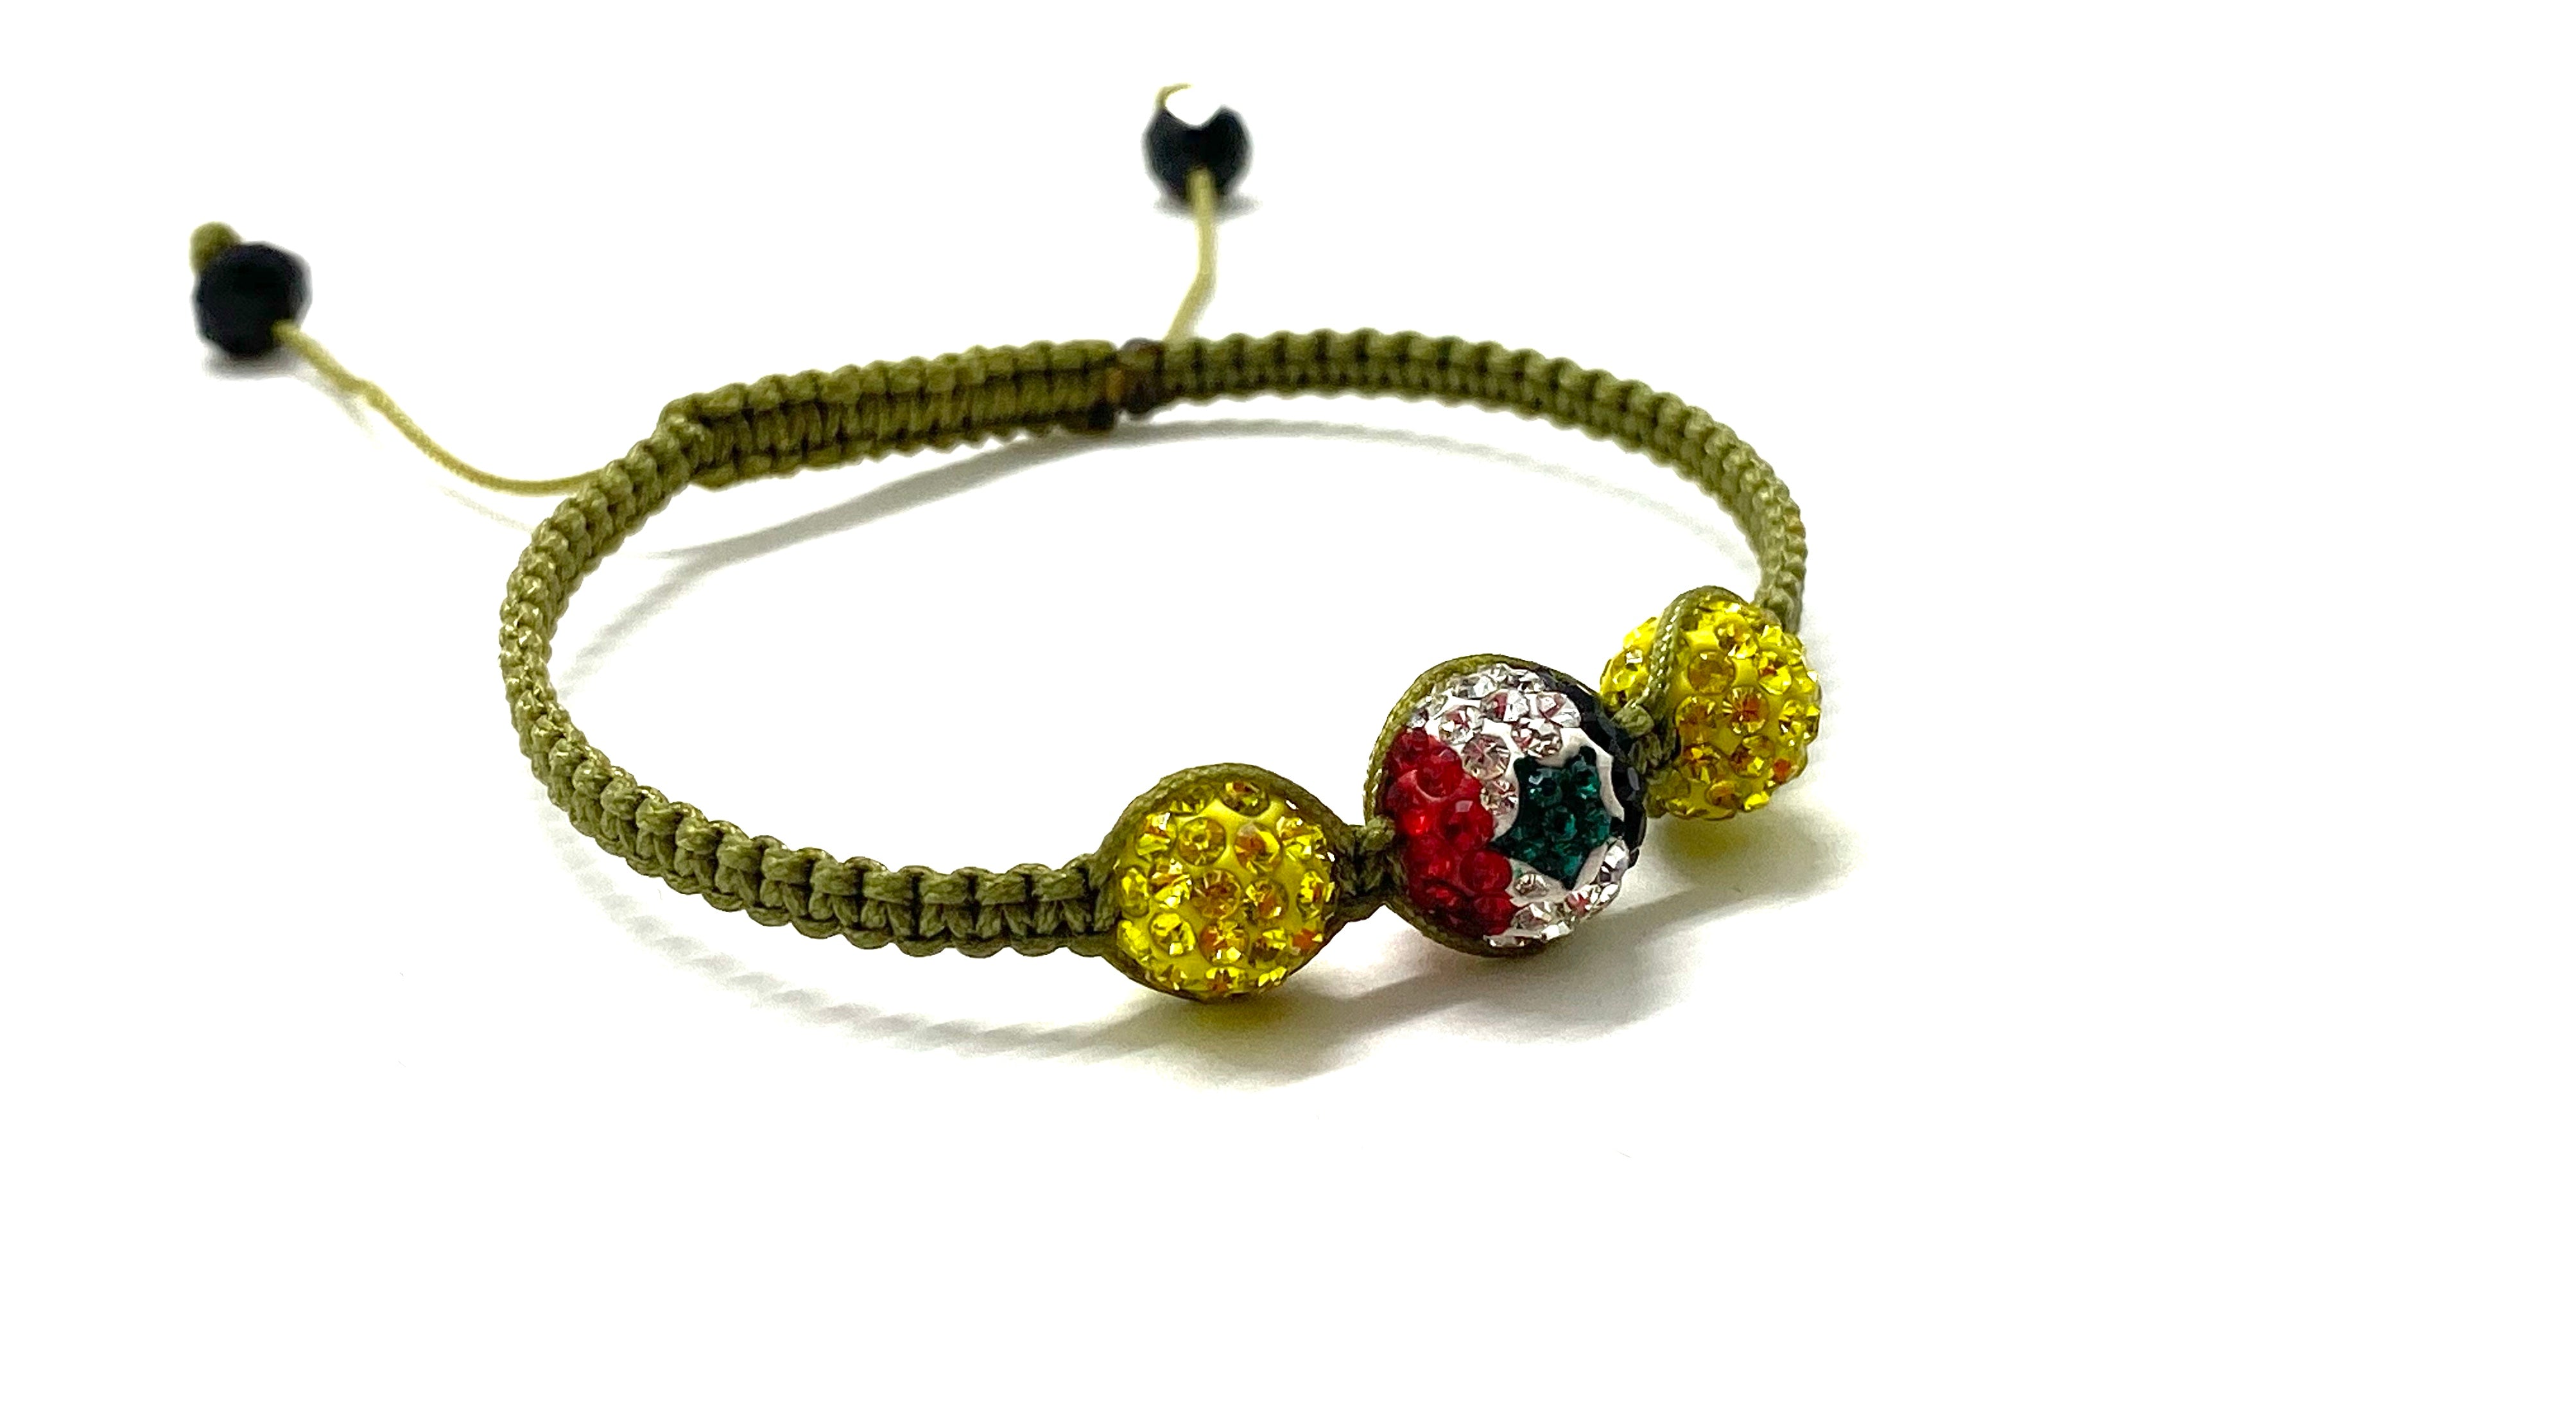 Syrian flag bracelet, yellow crystal beads and khaki braid